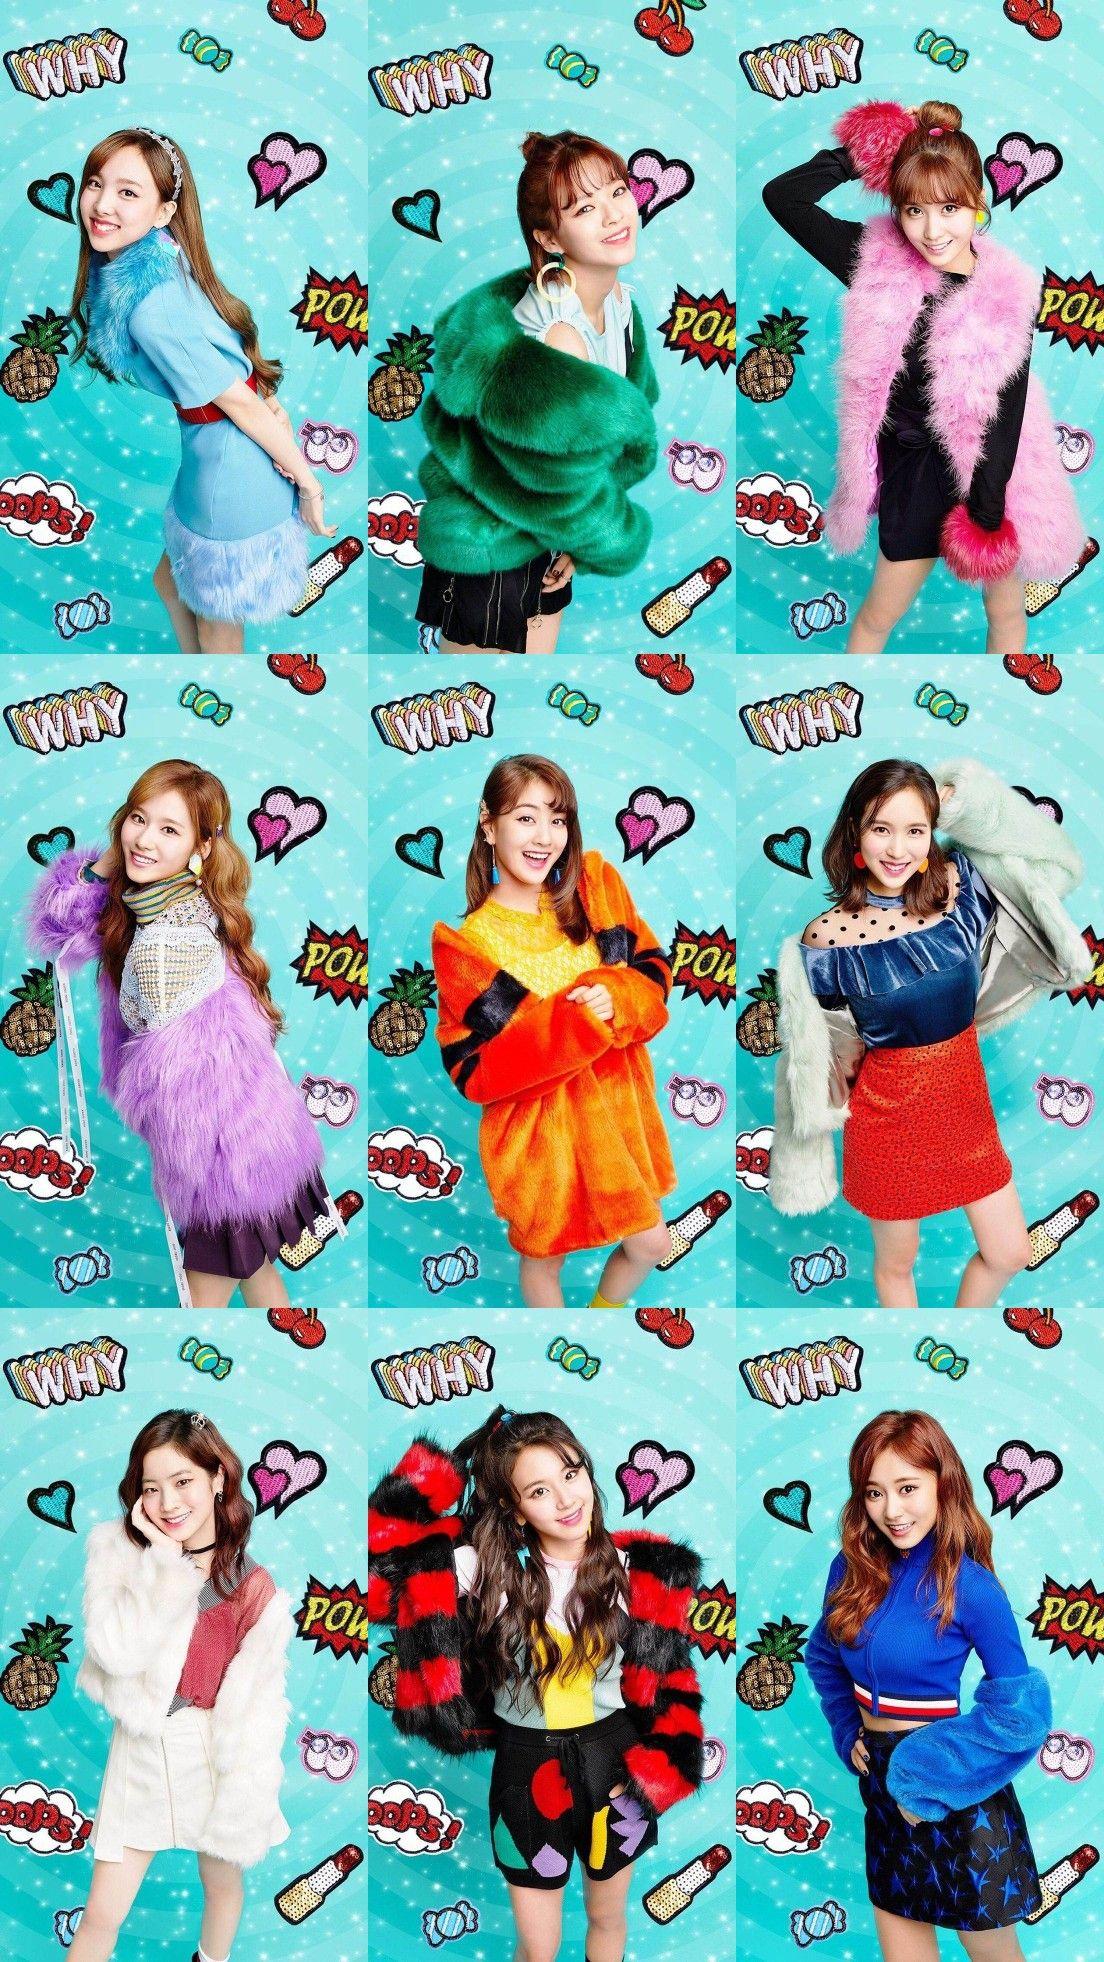 TWICE #CandyPop #Nayeon #Jeongyeon #Momo #Sana #Jihyo #Mina